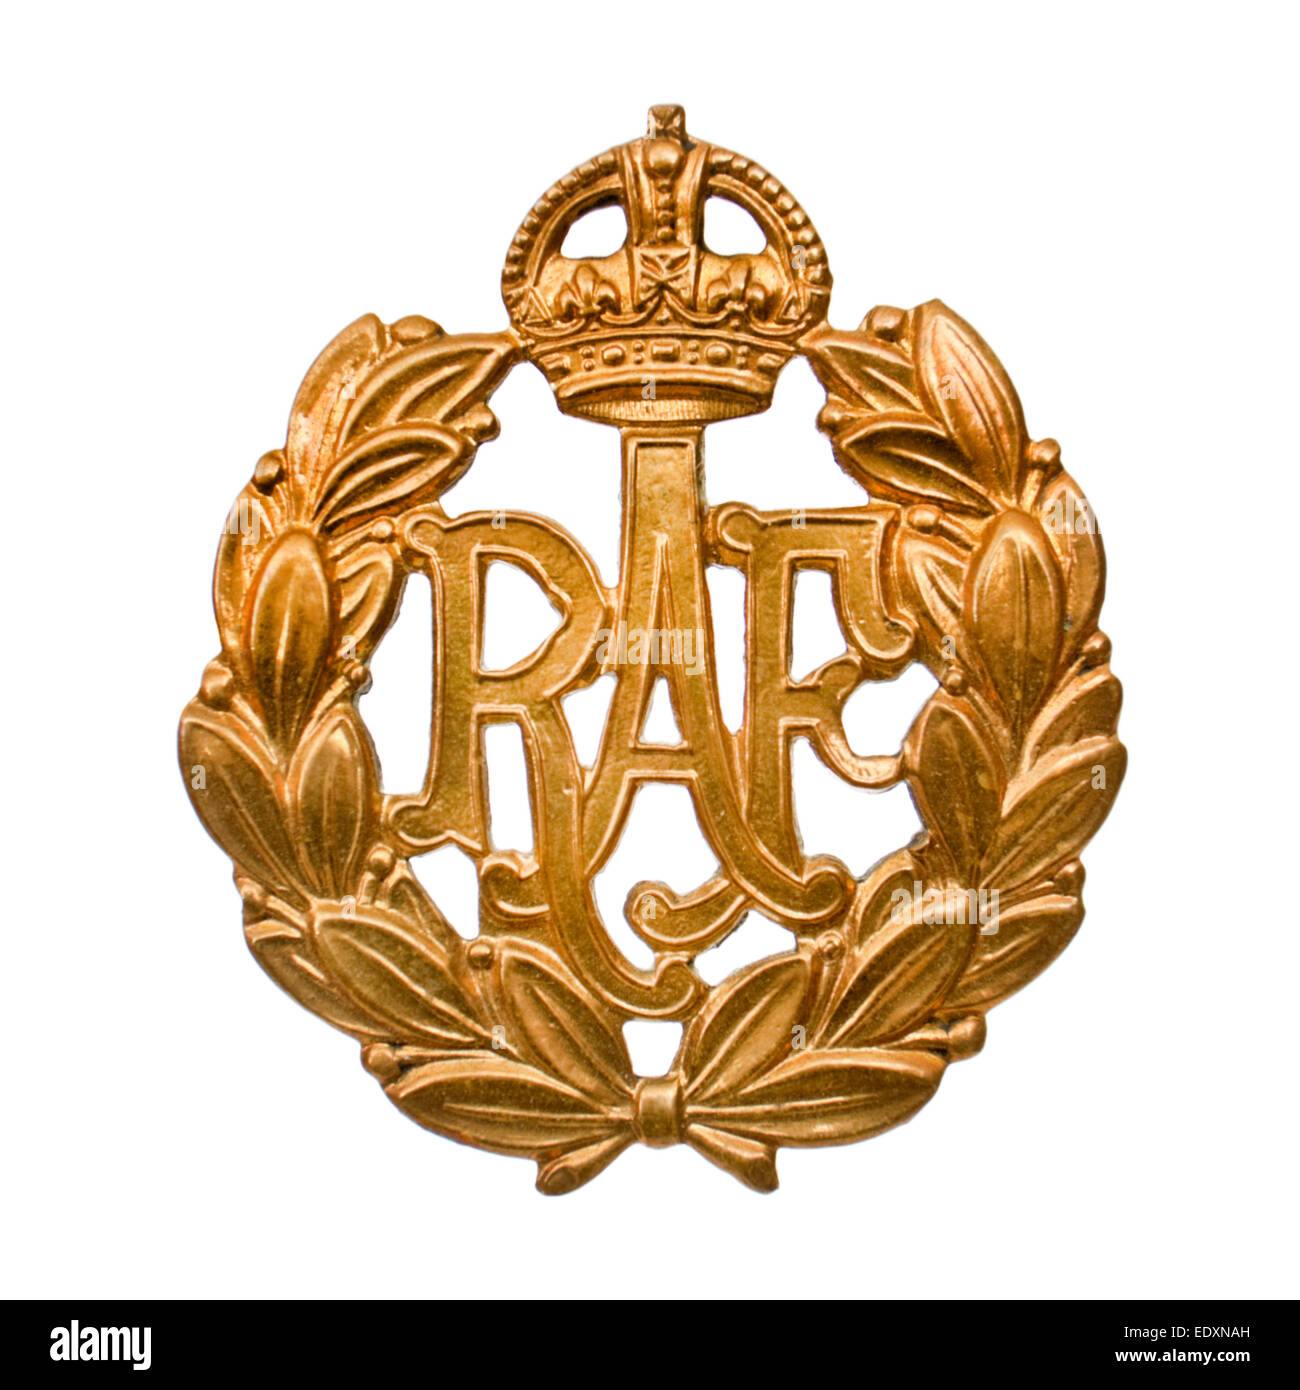 Grupo 8 oficina central RAF Insignia Pin